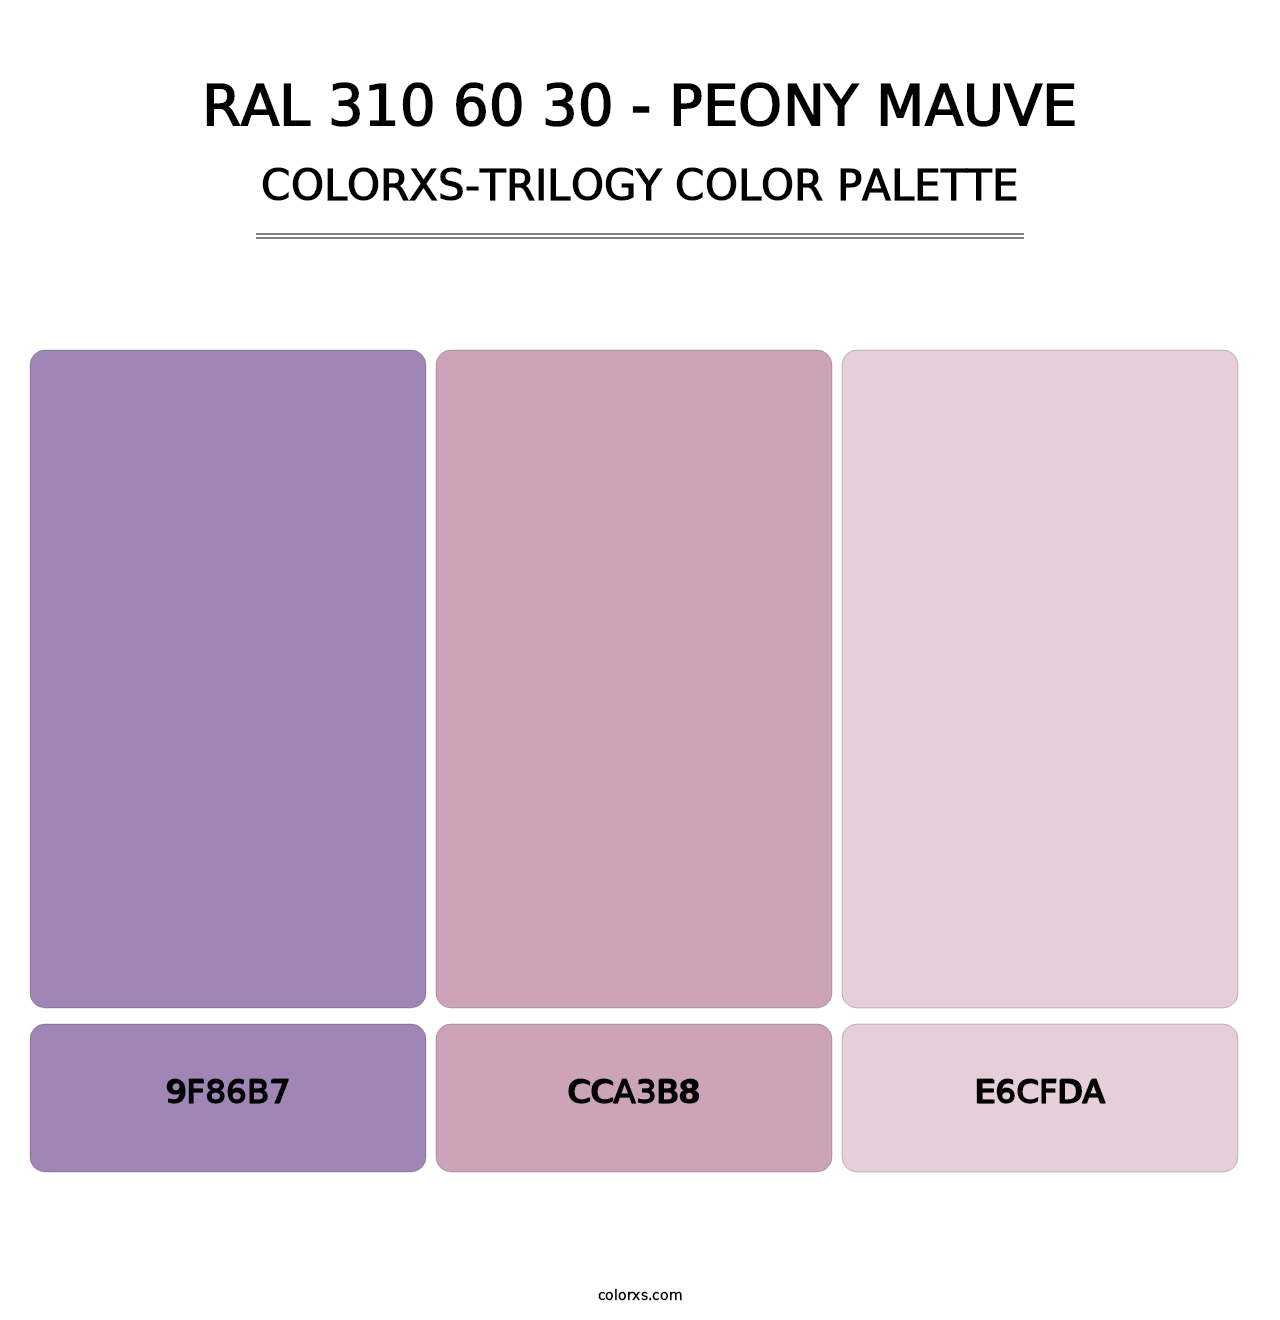 RAL 310 60 30 - Peony Mauve - Colorxs Trilogy Palette